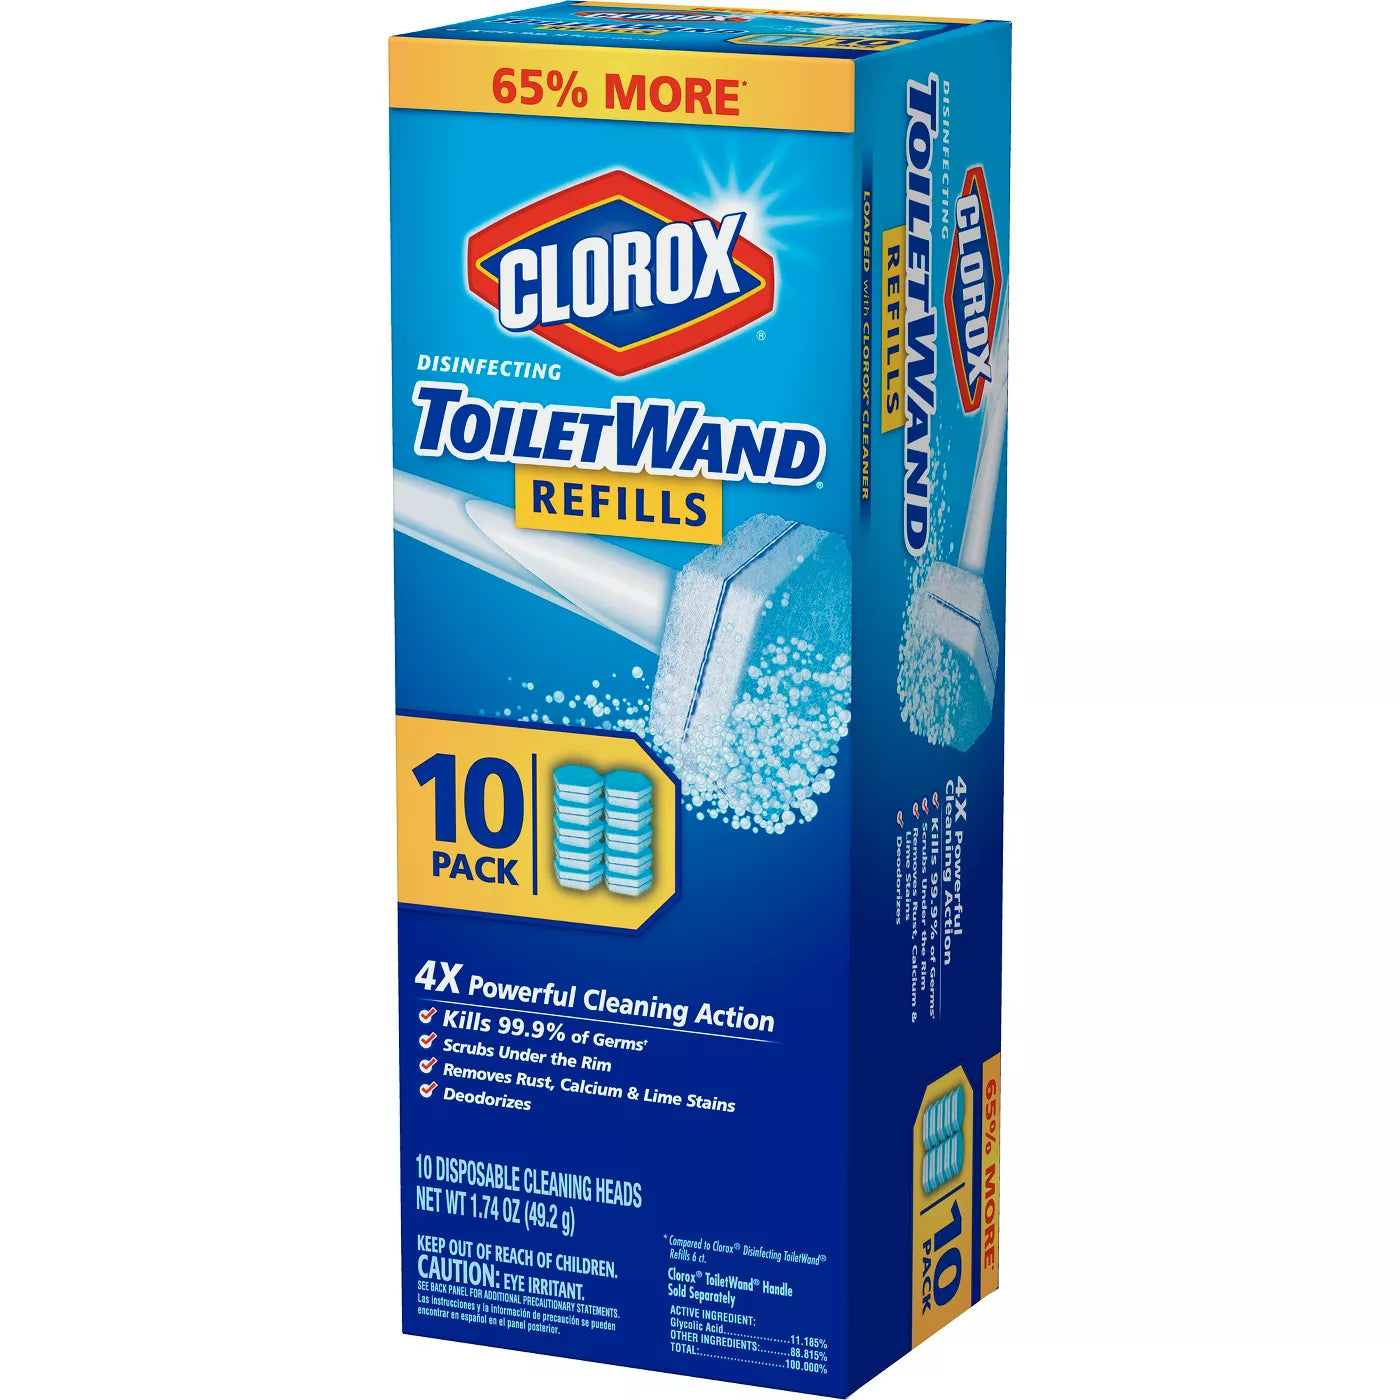 Clorox Toilet Wand Head Refills – Pack of 10